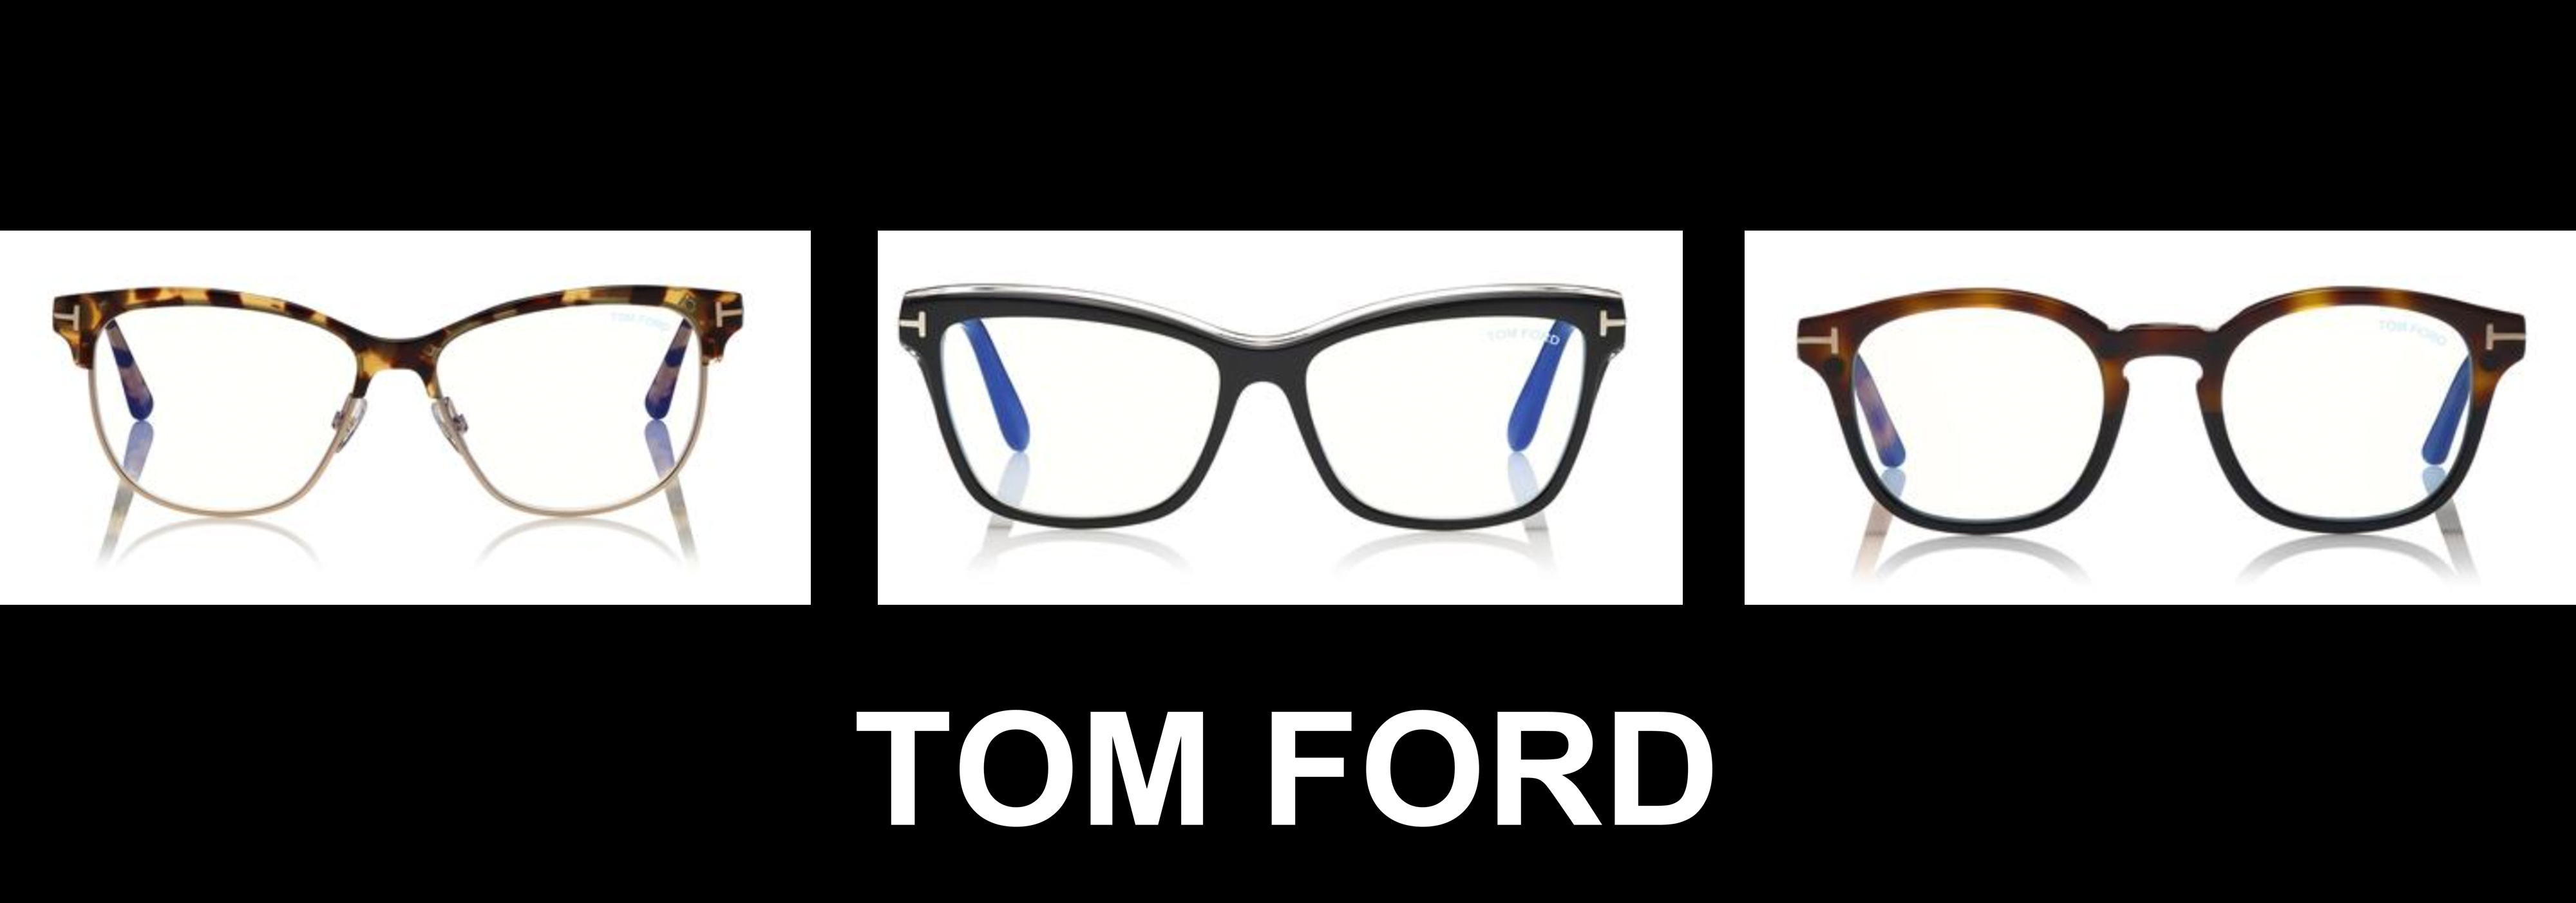 designer frames from Tom Ford - Northern Ireland Optician